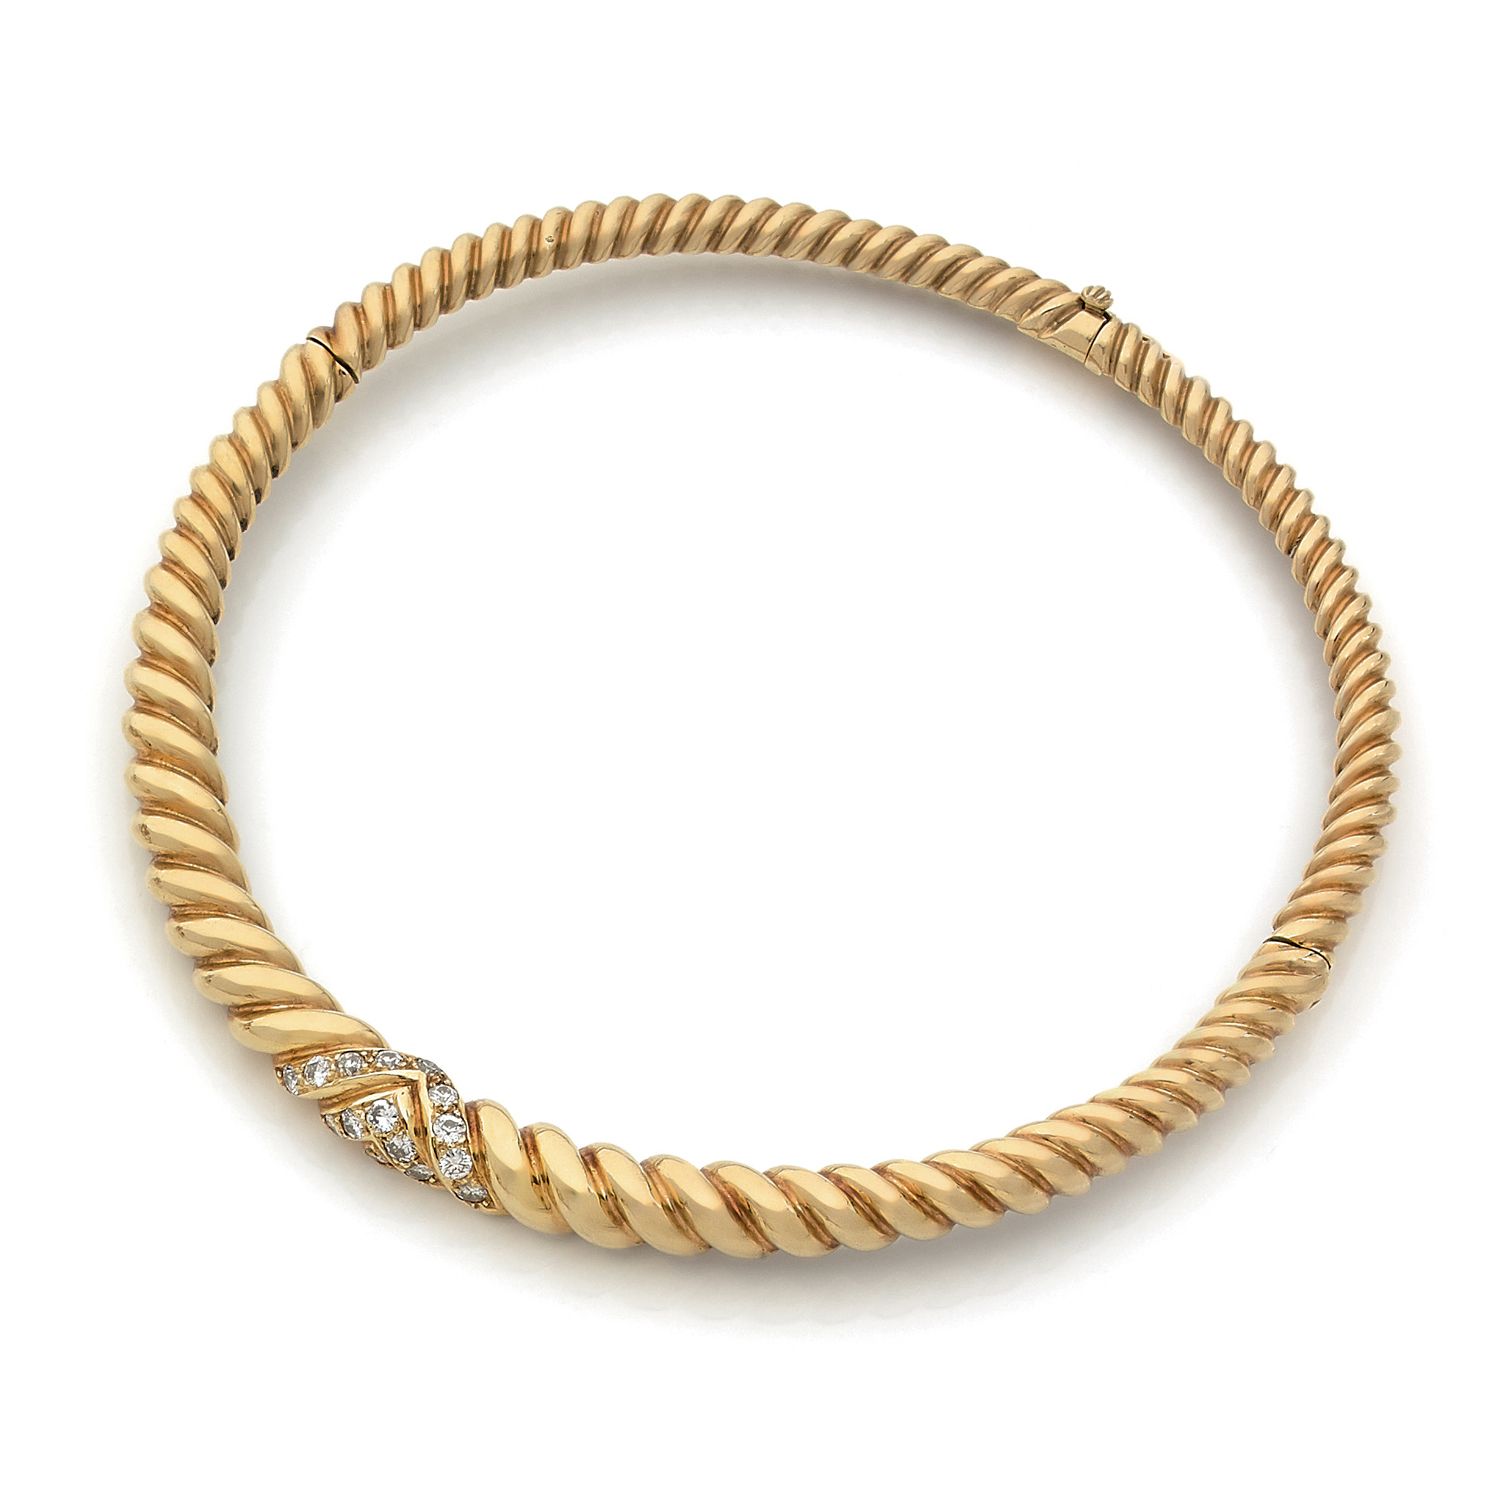 Null 刚性18K(750‰)黄金扭曲项链，中间镶嵌钻石

1980年代的法国作品

直径：10,7 cm

毛重：69克